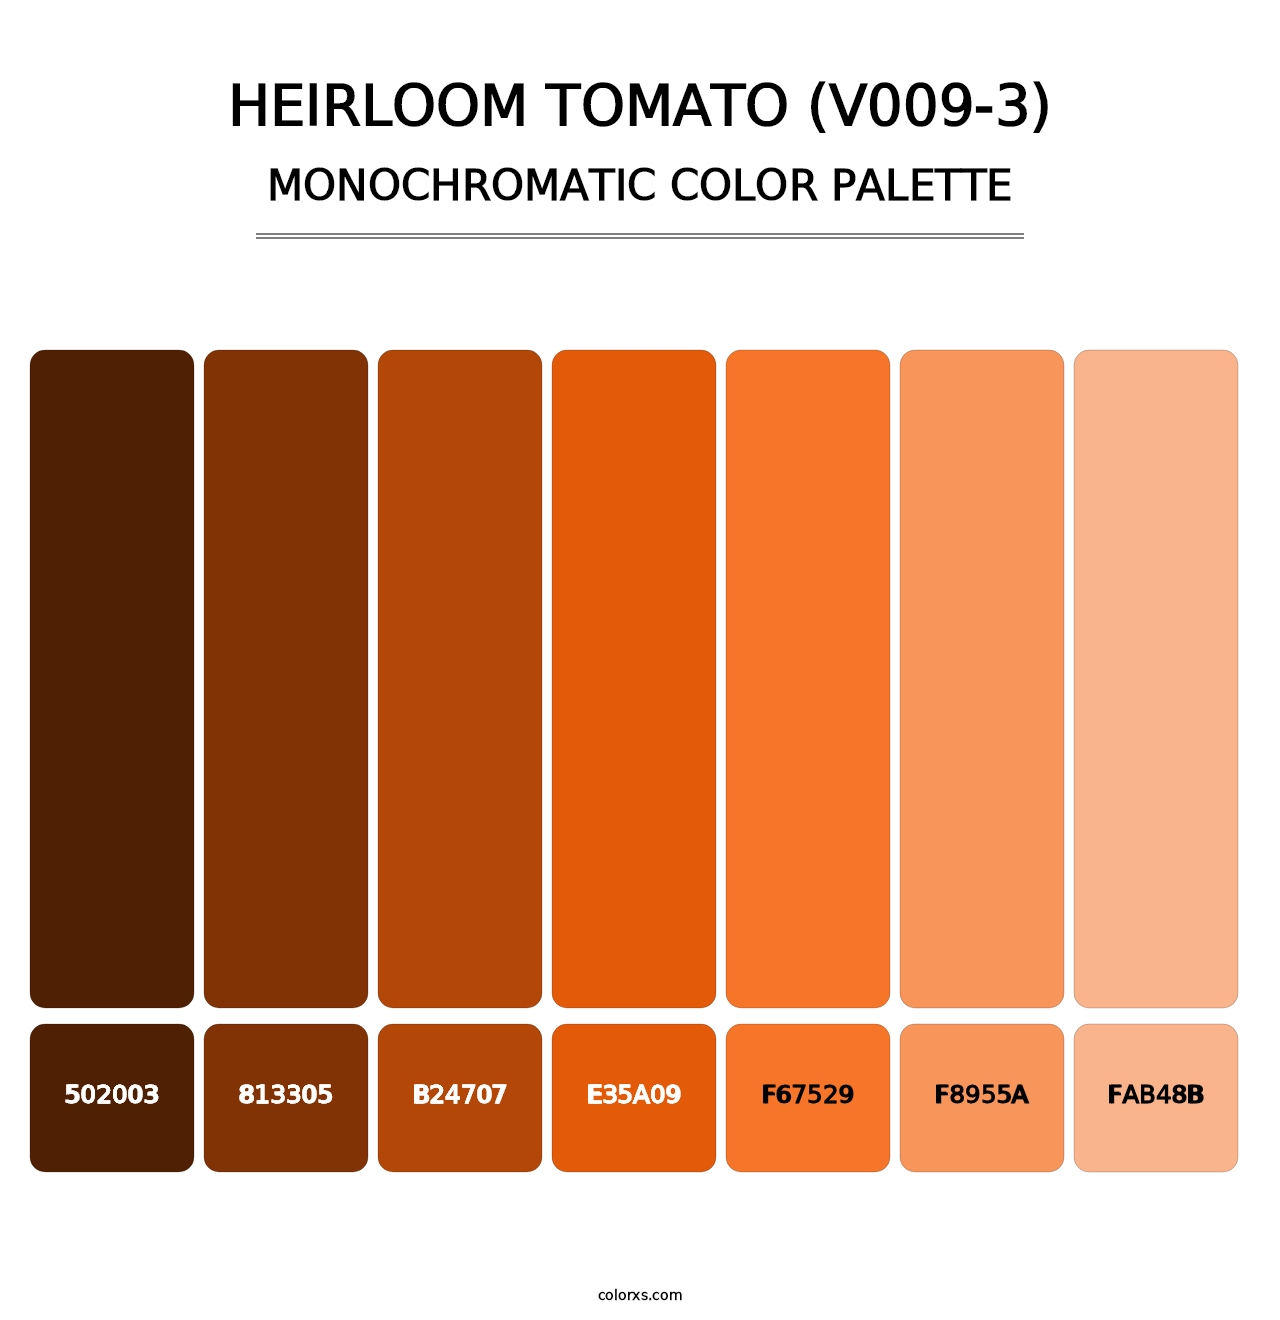 Heirloom Tomato (V009-3) - Monochromatic Color Palette